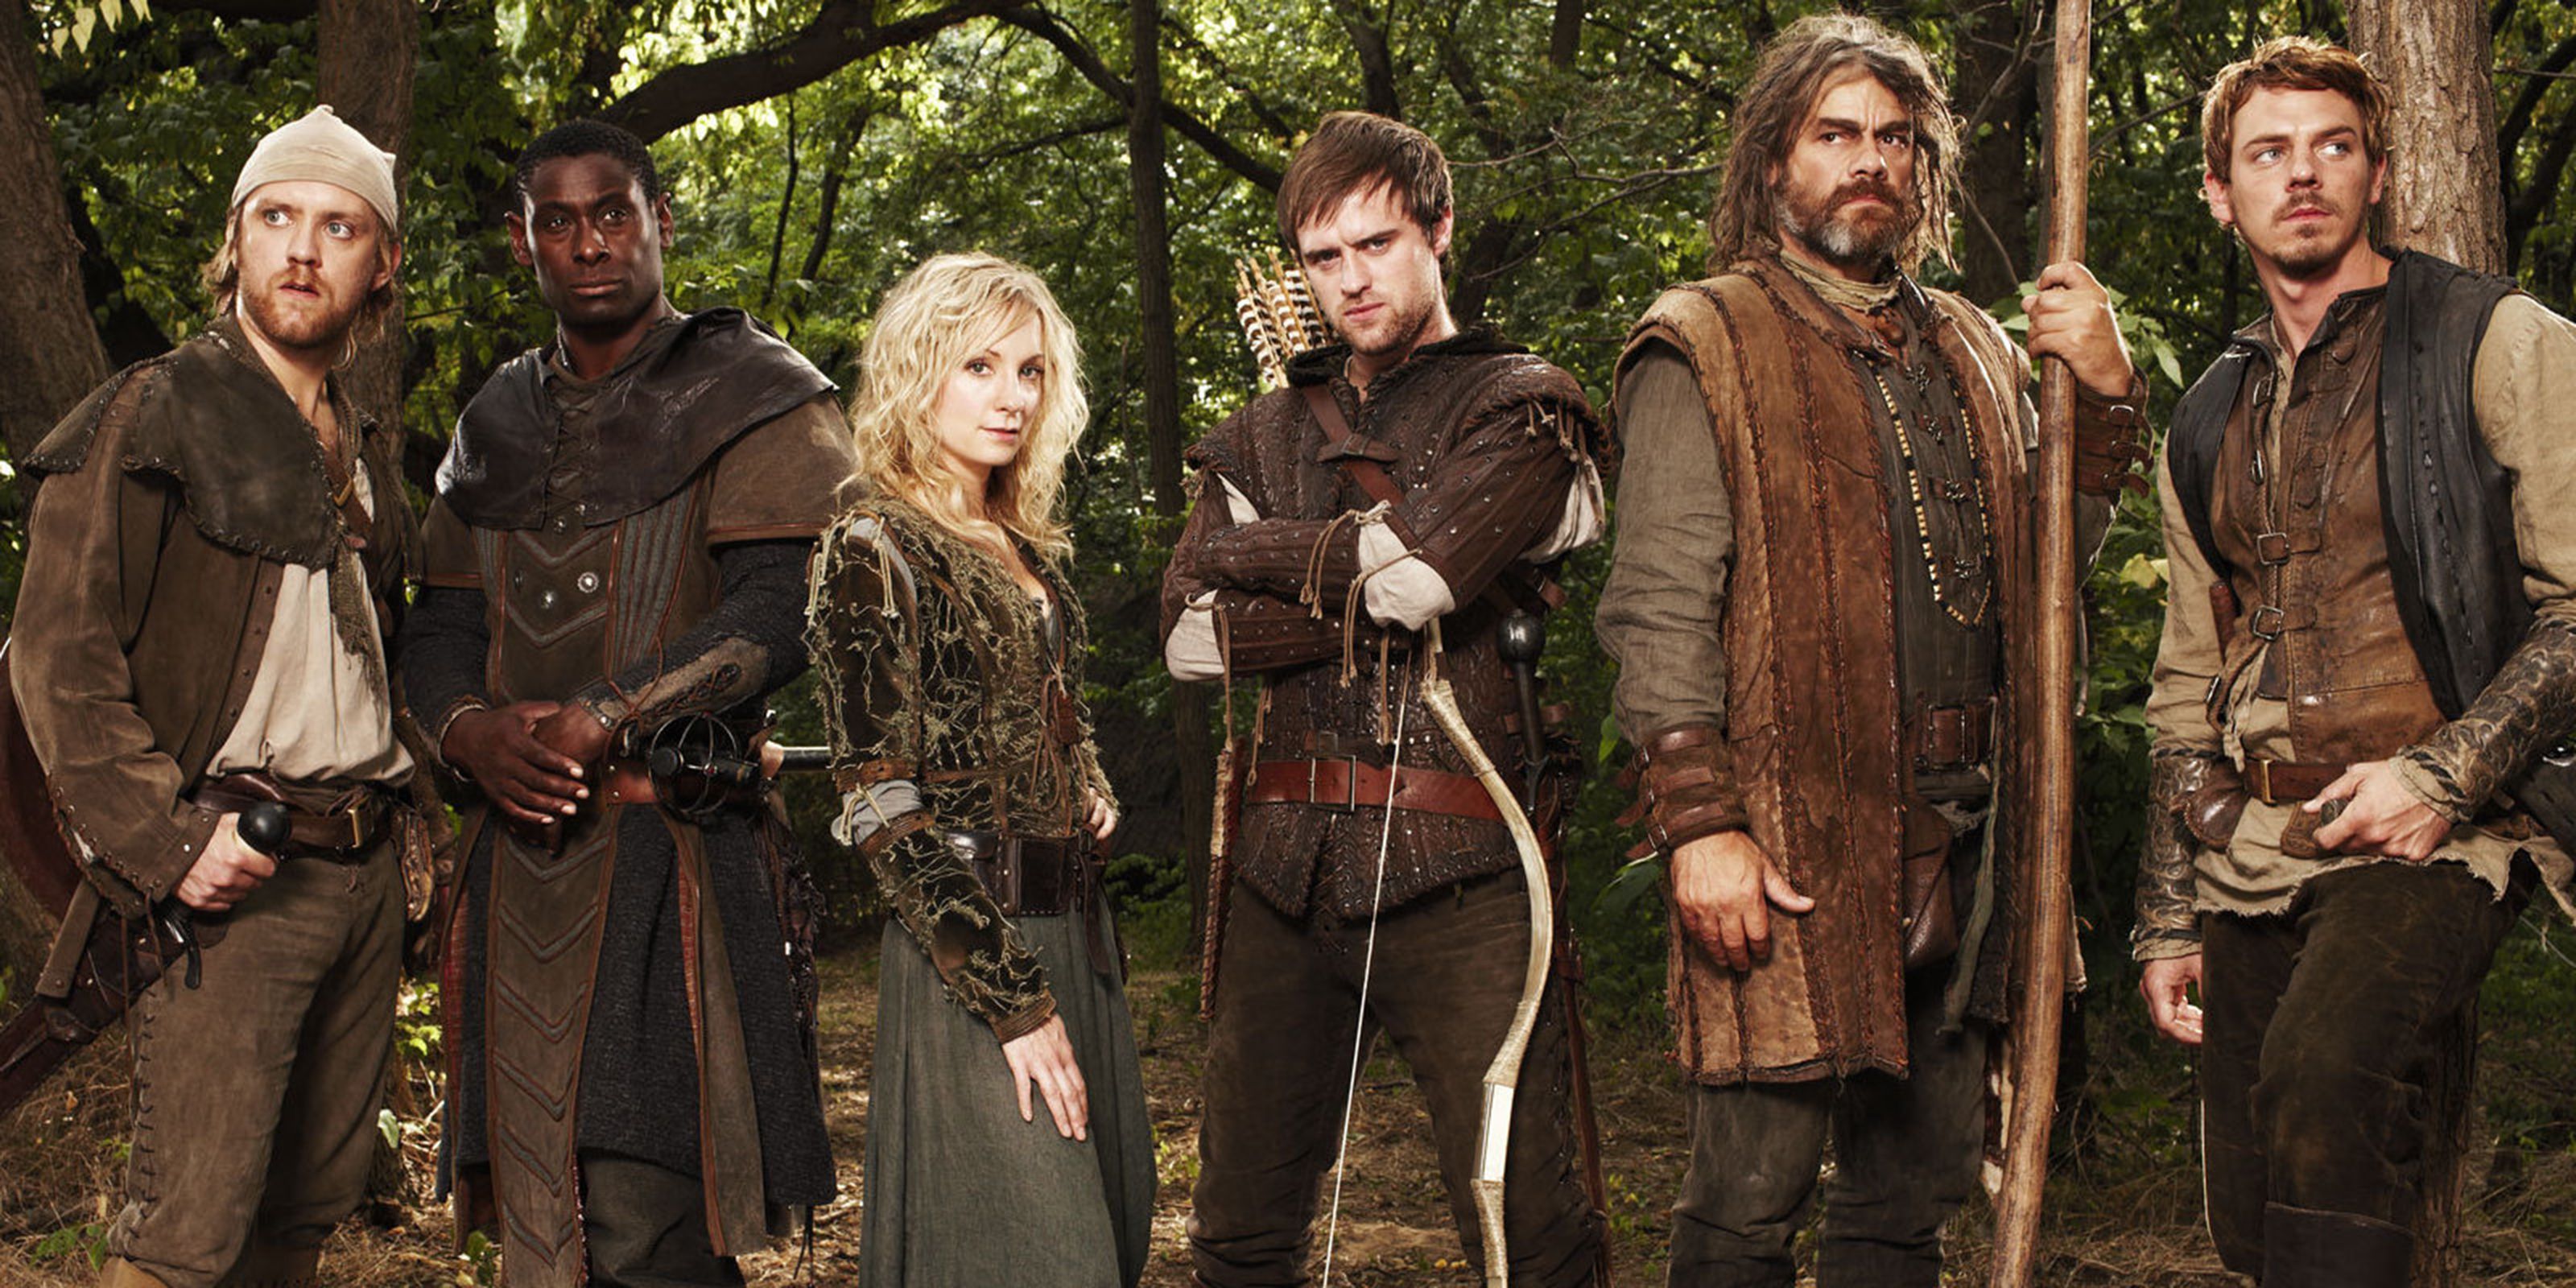 Cast of BBC's Robin Hood